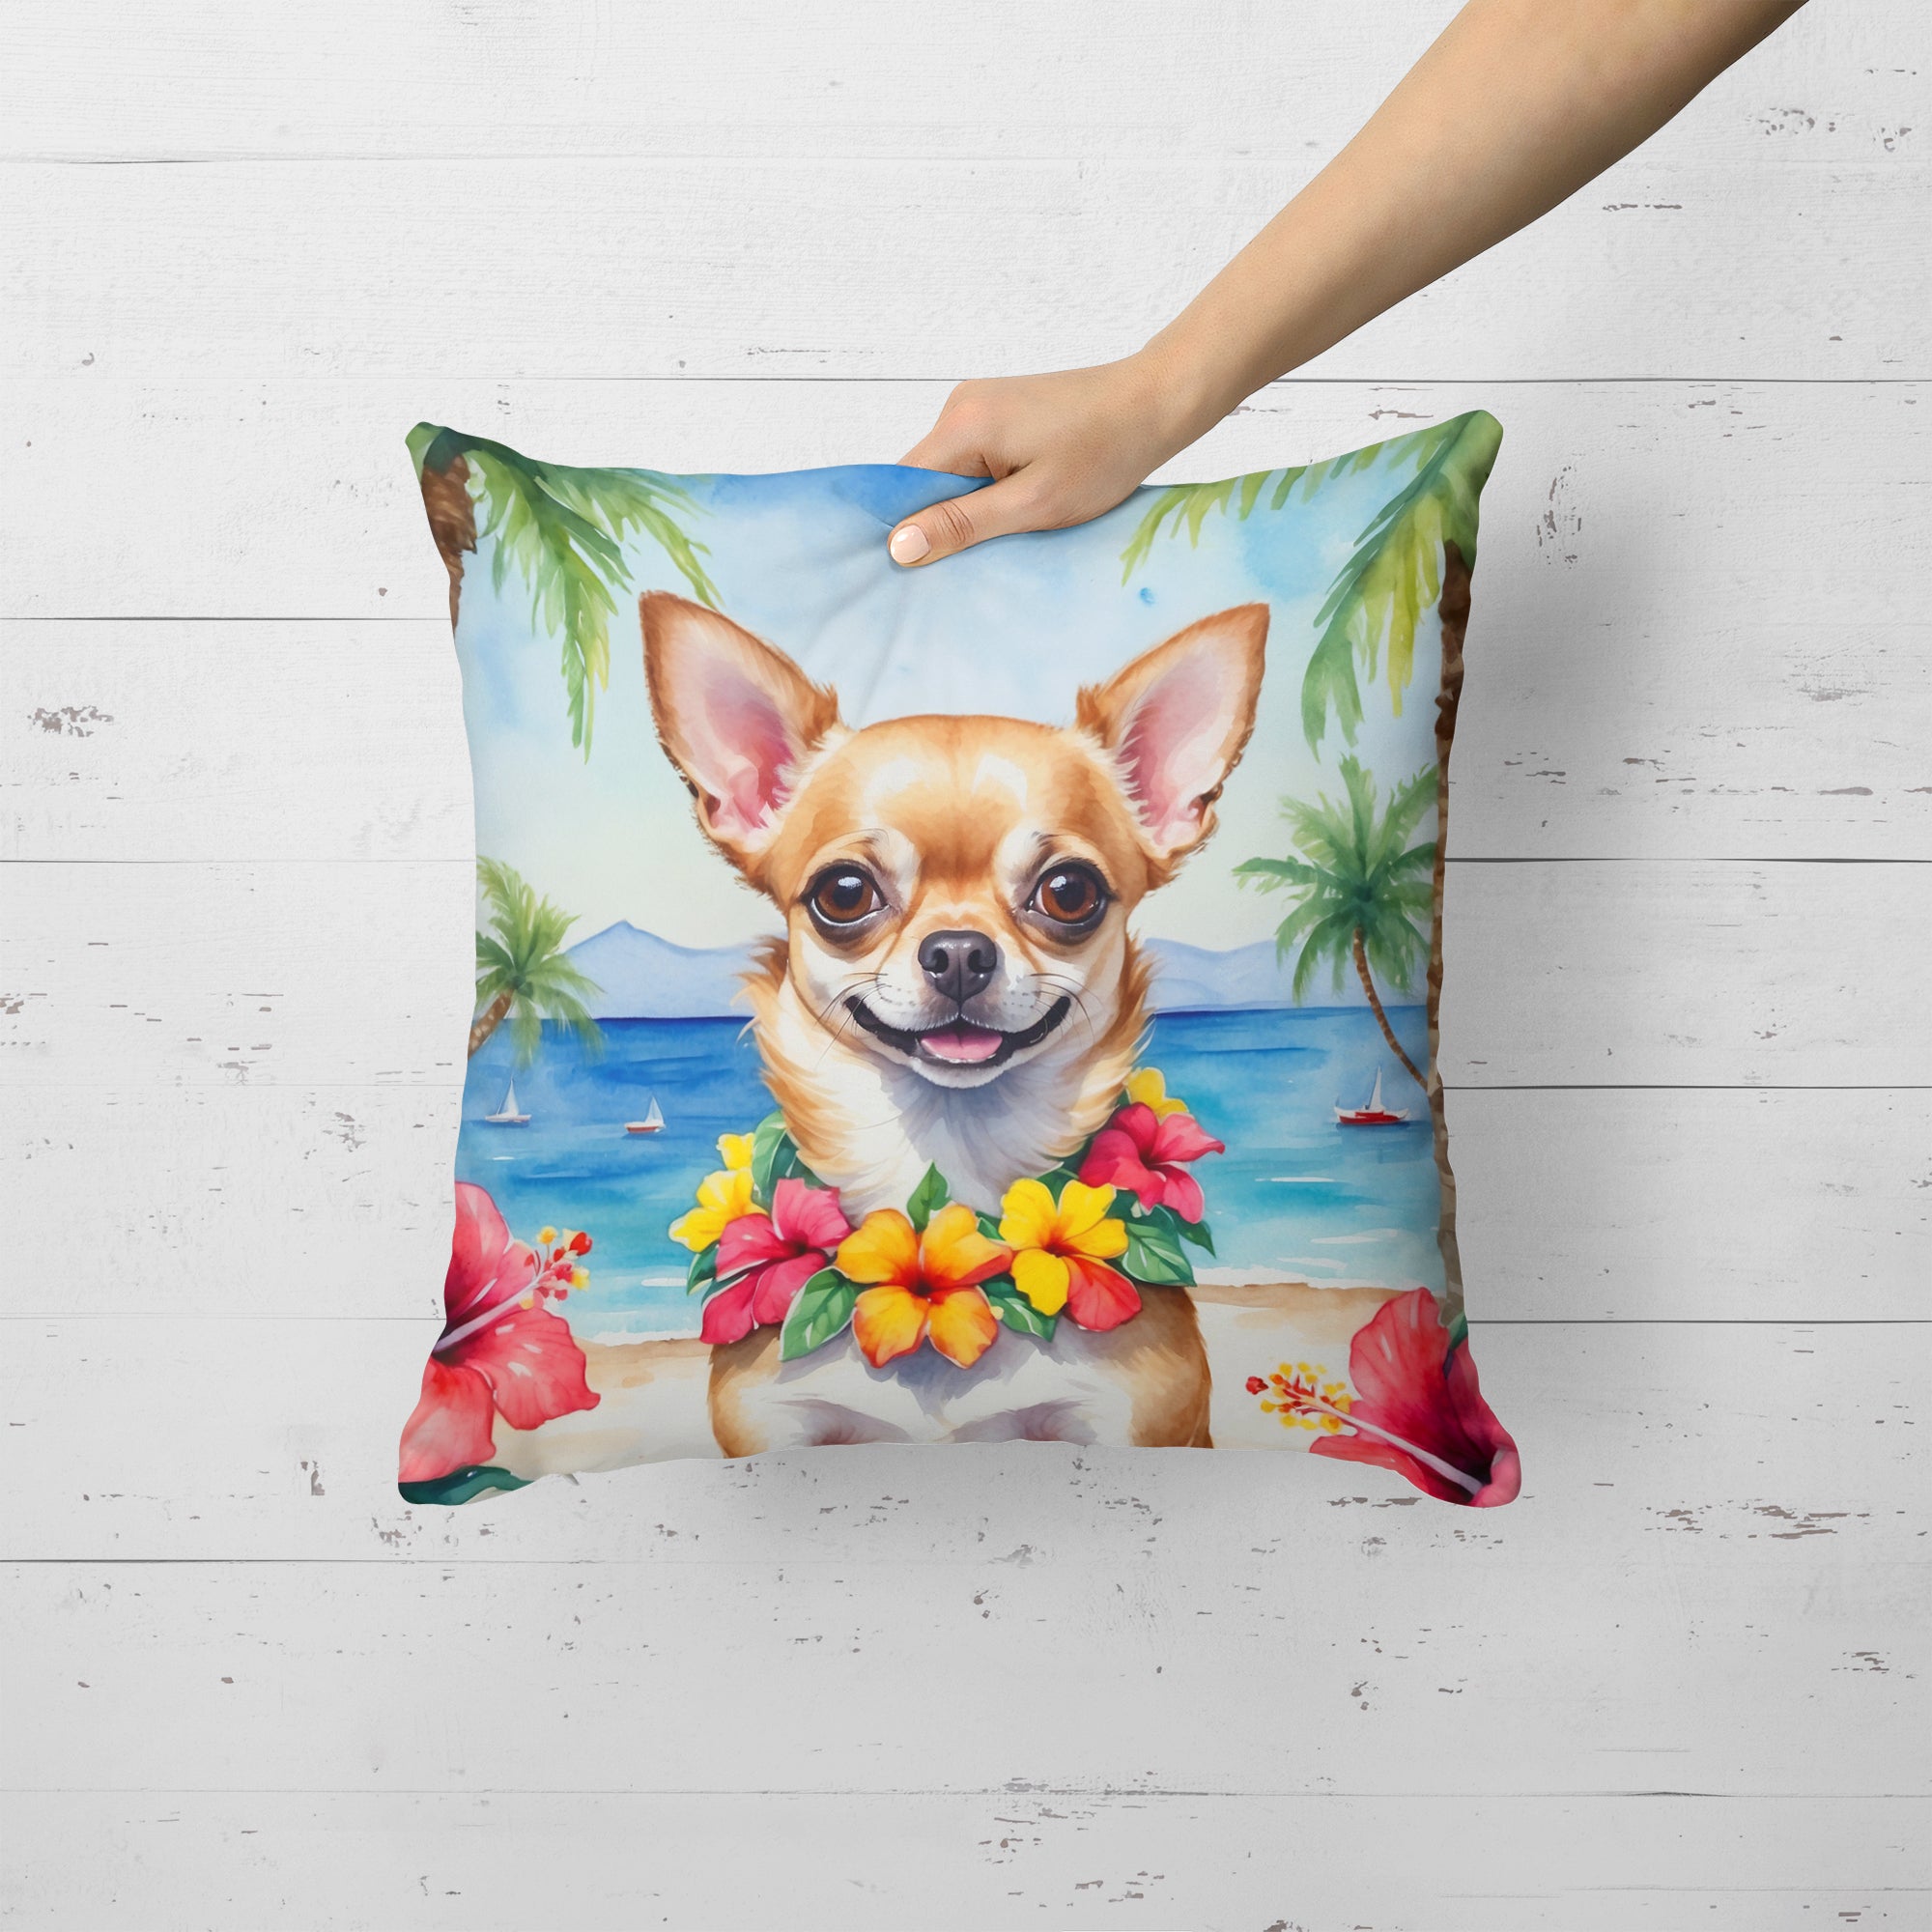 Buy this Chihuahua Luau Throw Pillow